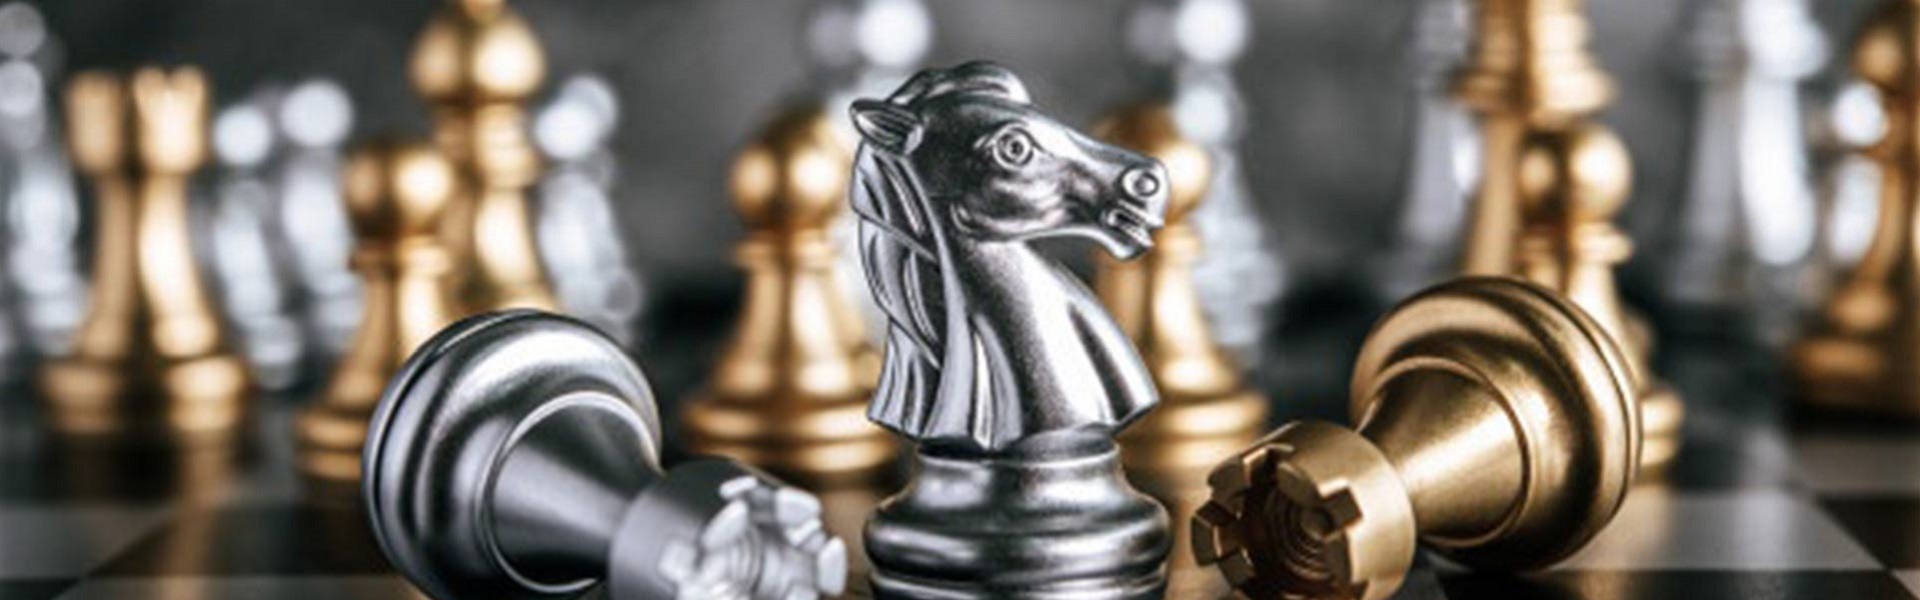 Škola šaha Hrvatska |  Chess lessons Dubai & New York